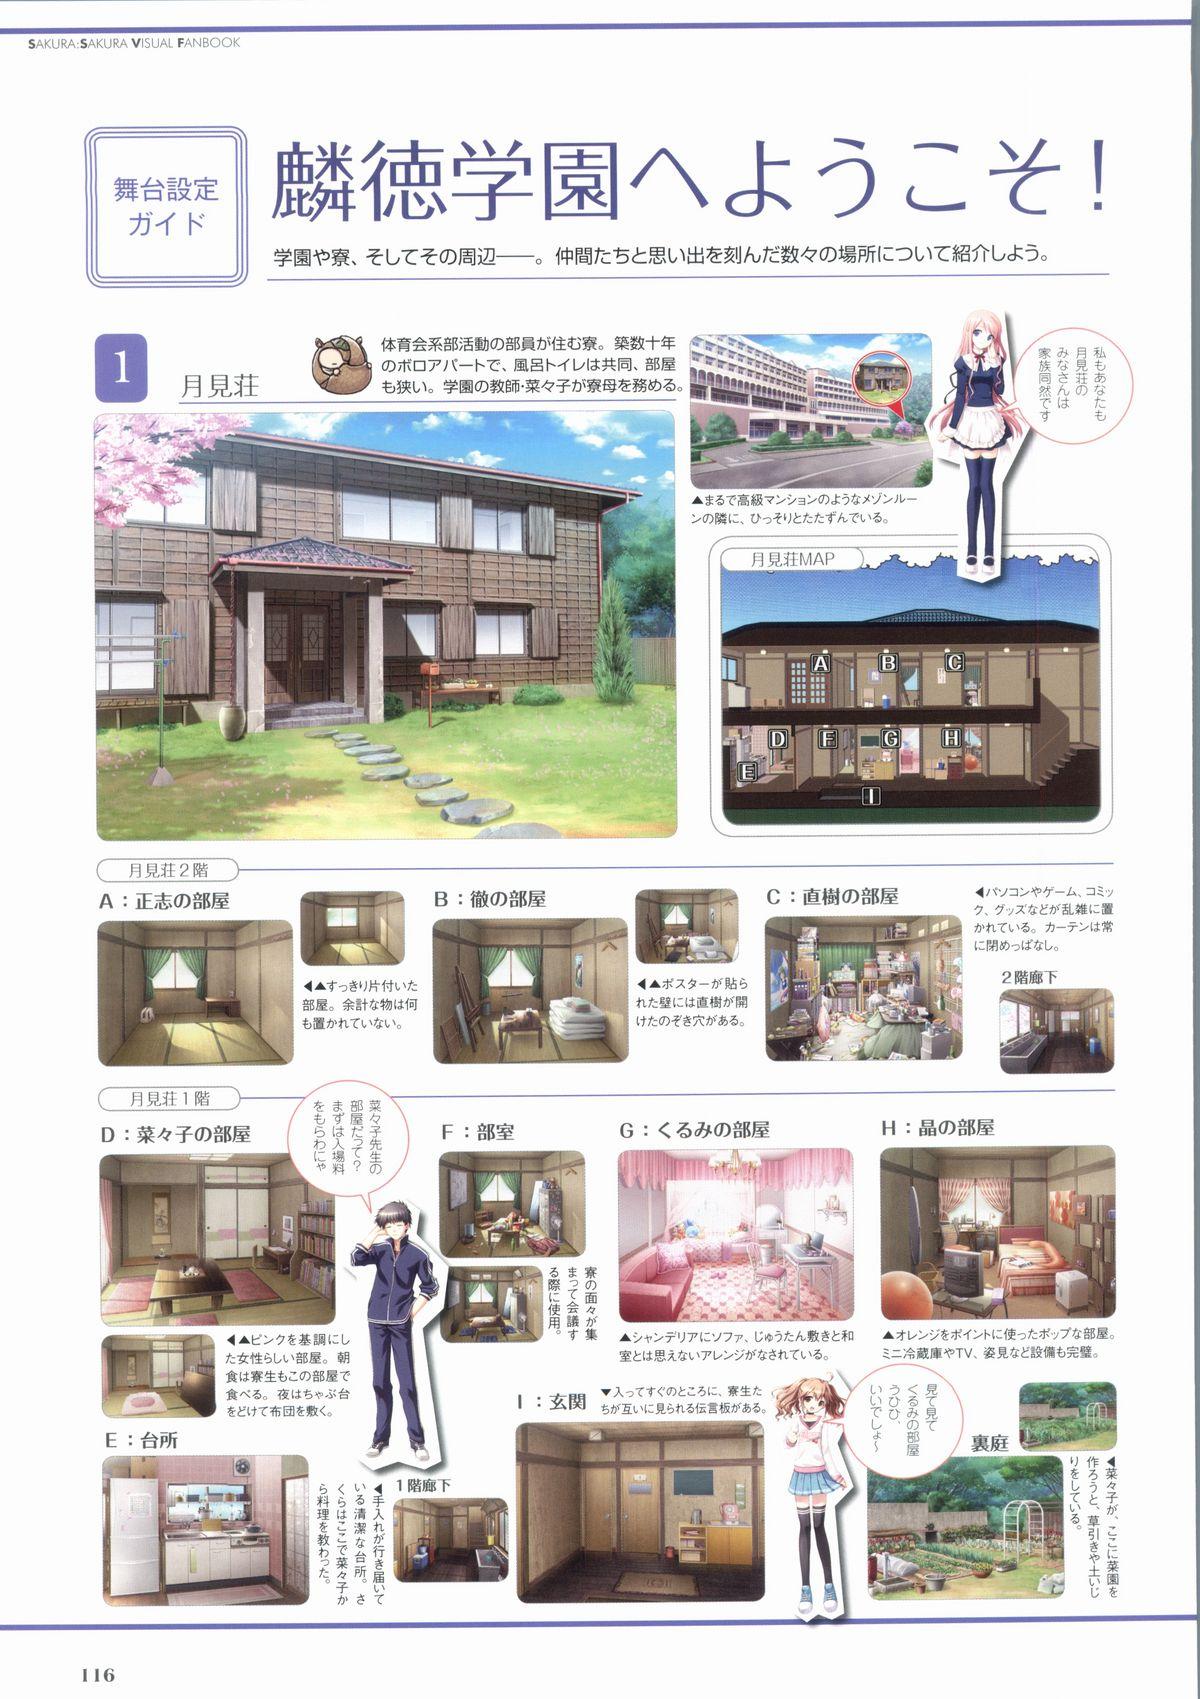 Sakura Sakura Visual Fan Book 120